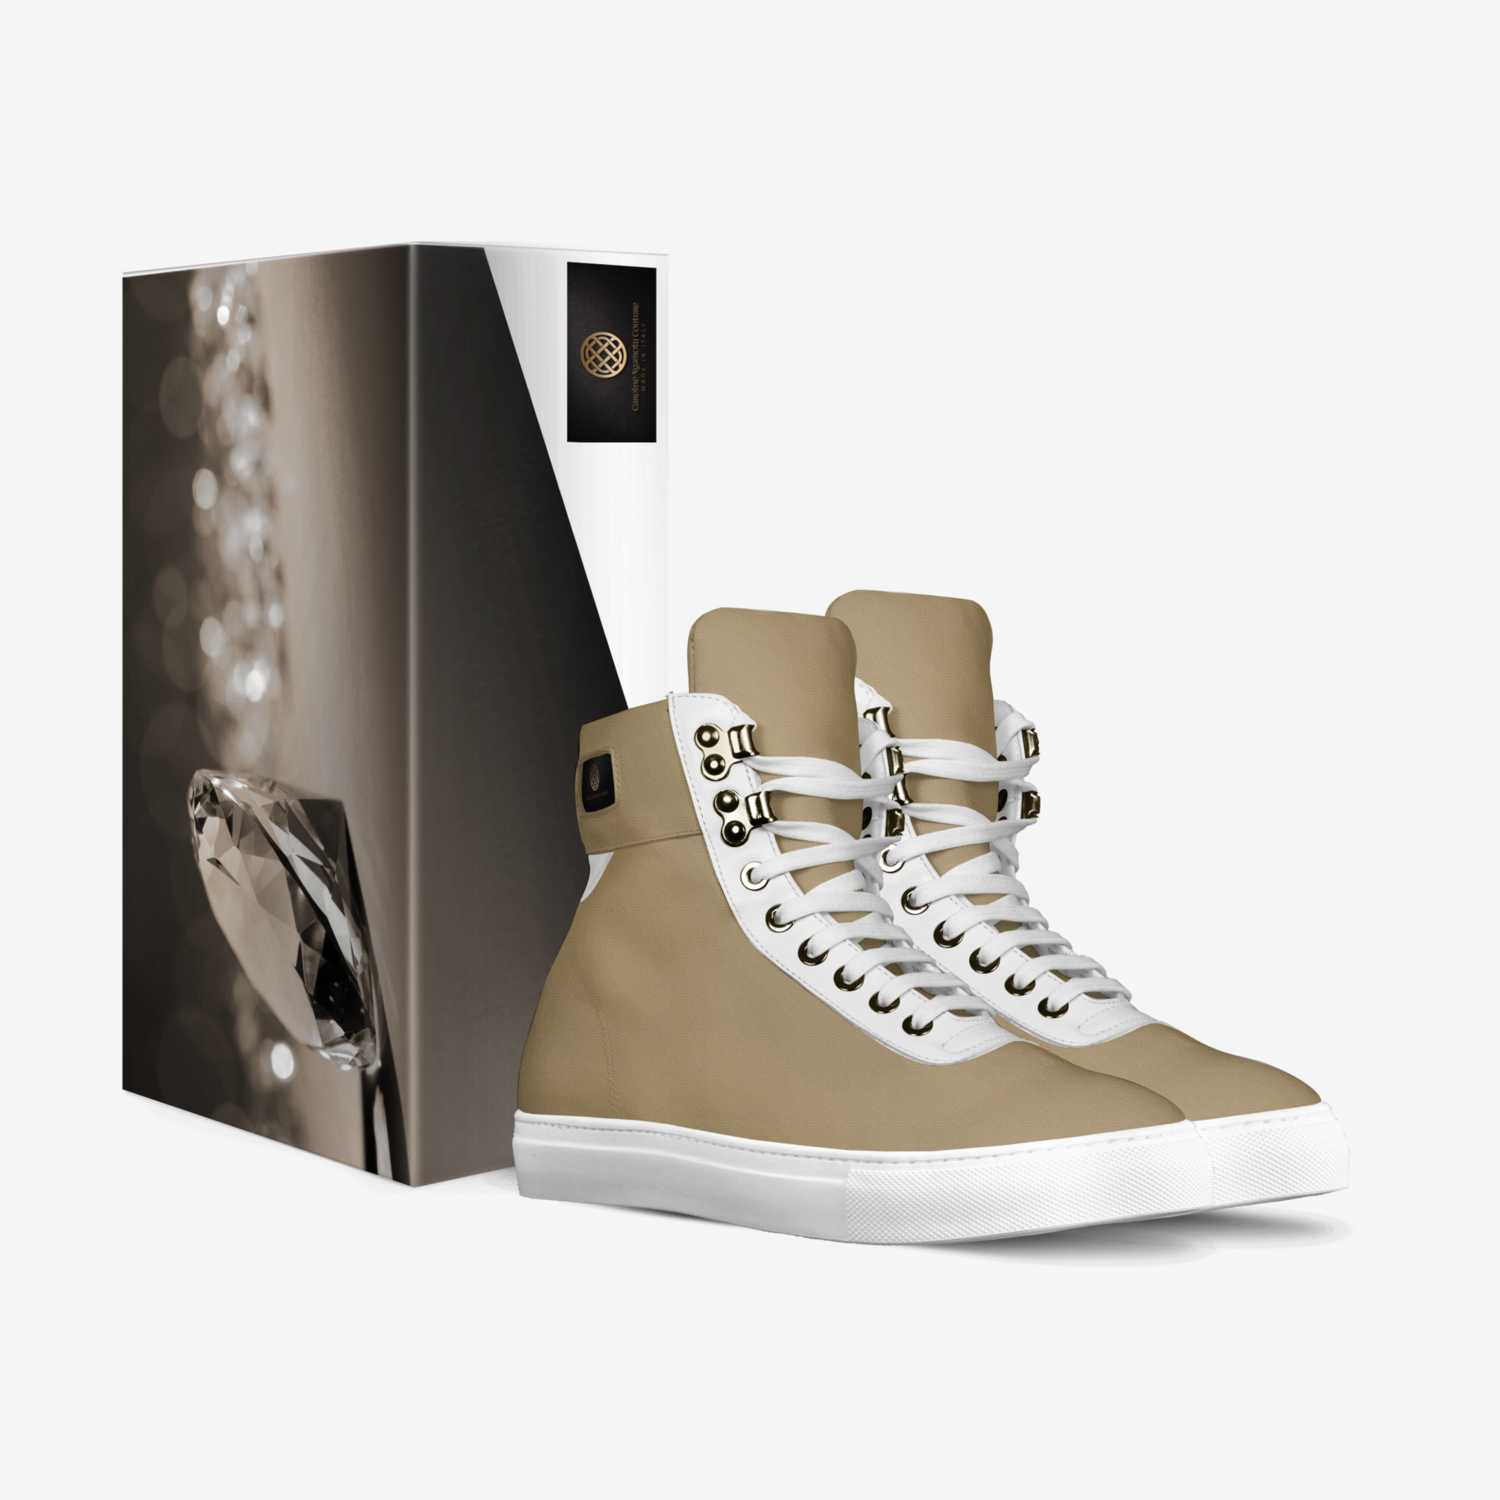 Seek1 custom made in Italy shoes by Caroline Ngamotu | Box view